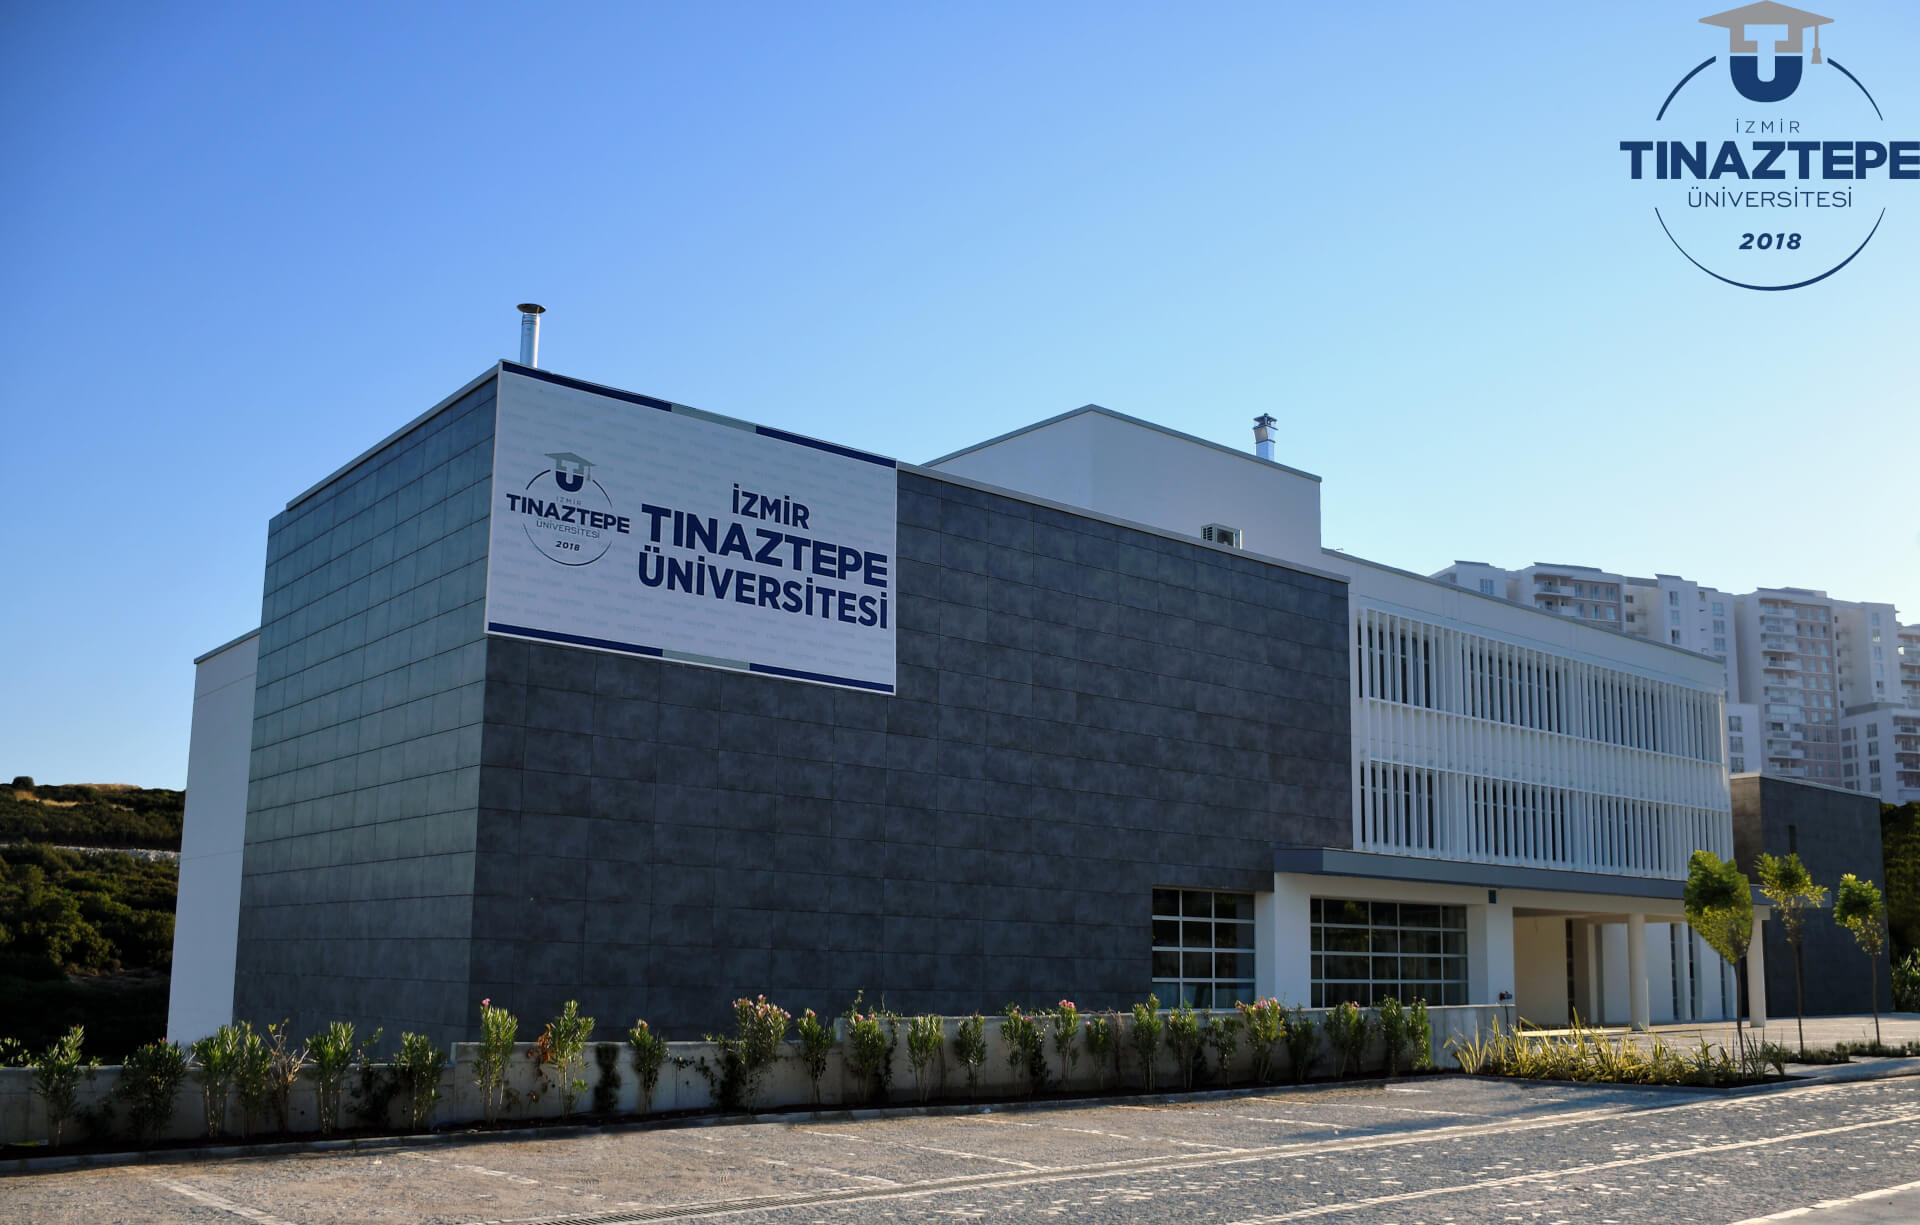 izmitinaz universitesi find and study 2 - Izmir Tınaztepe University